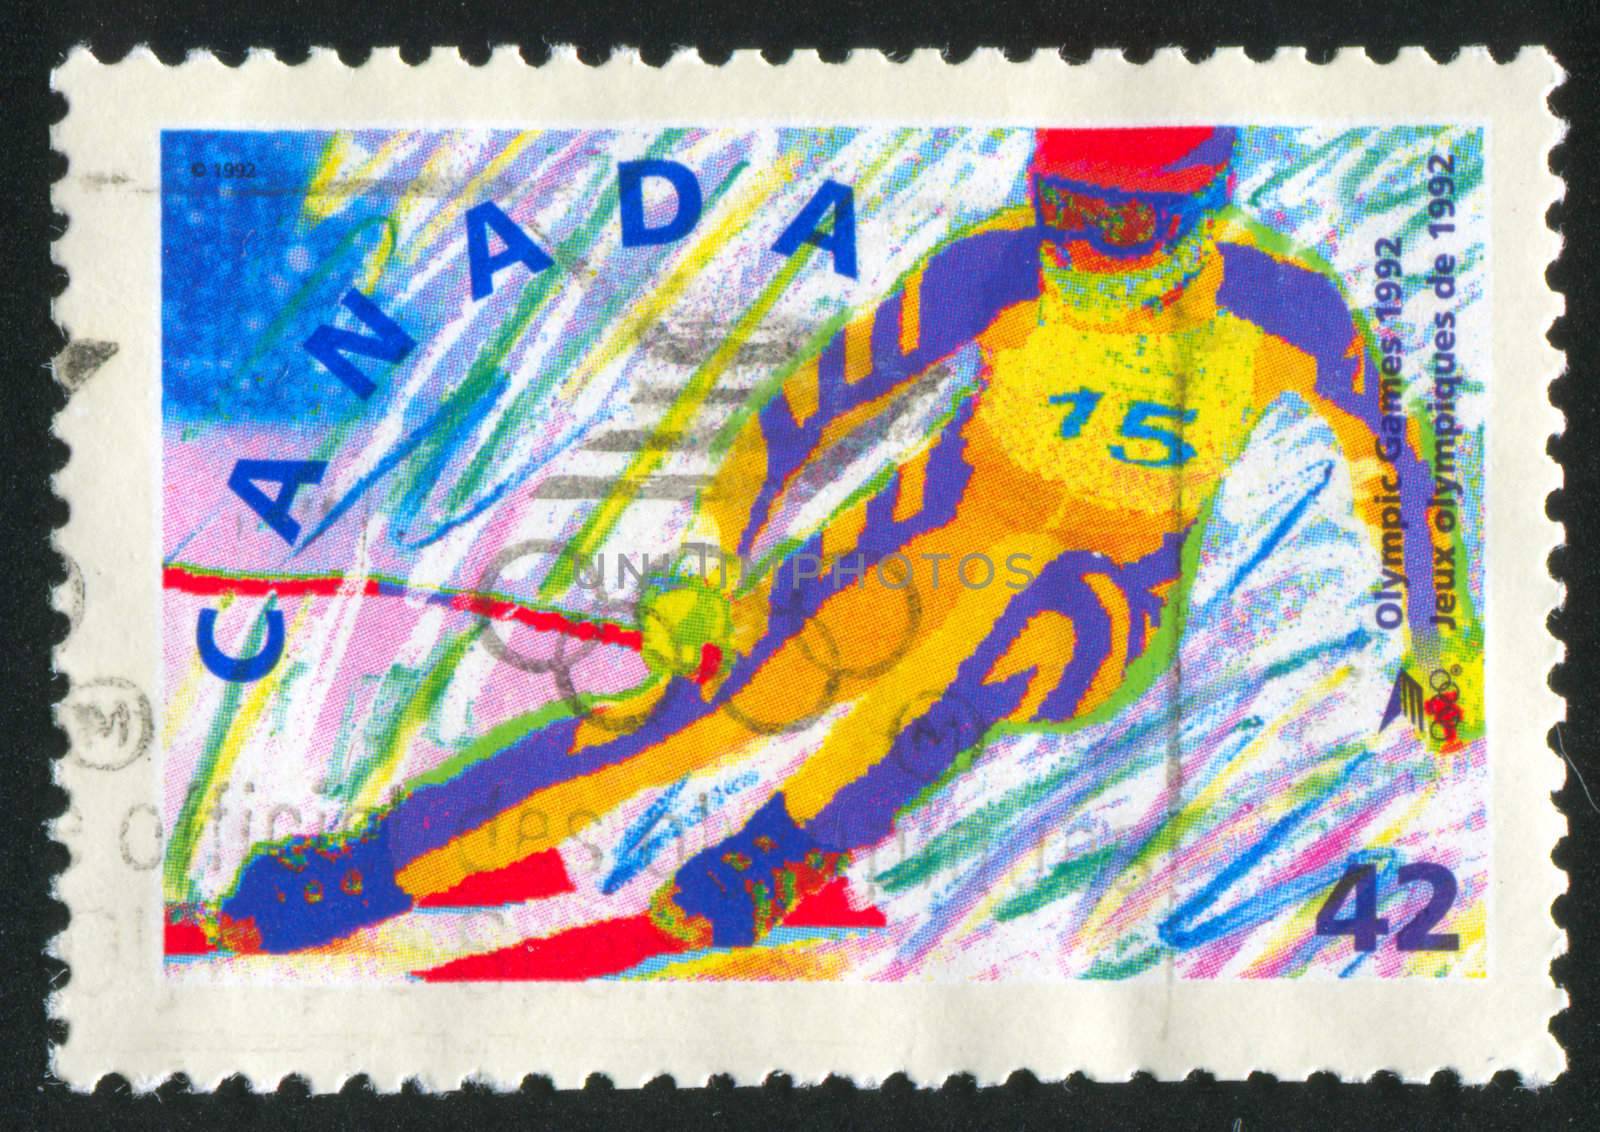 CANADA - CIRCA 1992: stamp printed by Canada, shows Alpine skiing, circa 1992